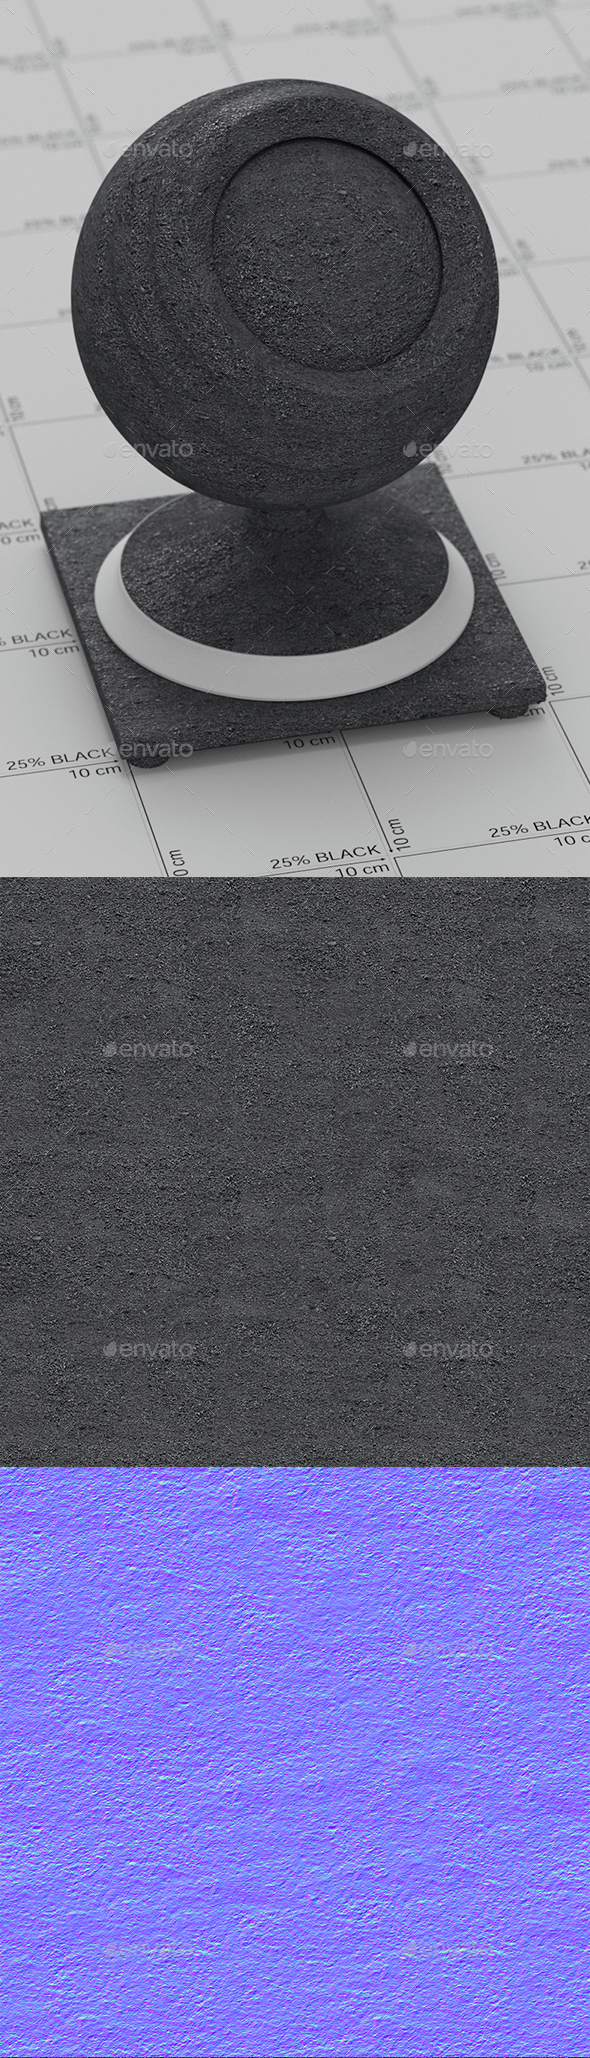 Seamless Asphalt Texture - 3Docean 15357256